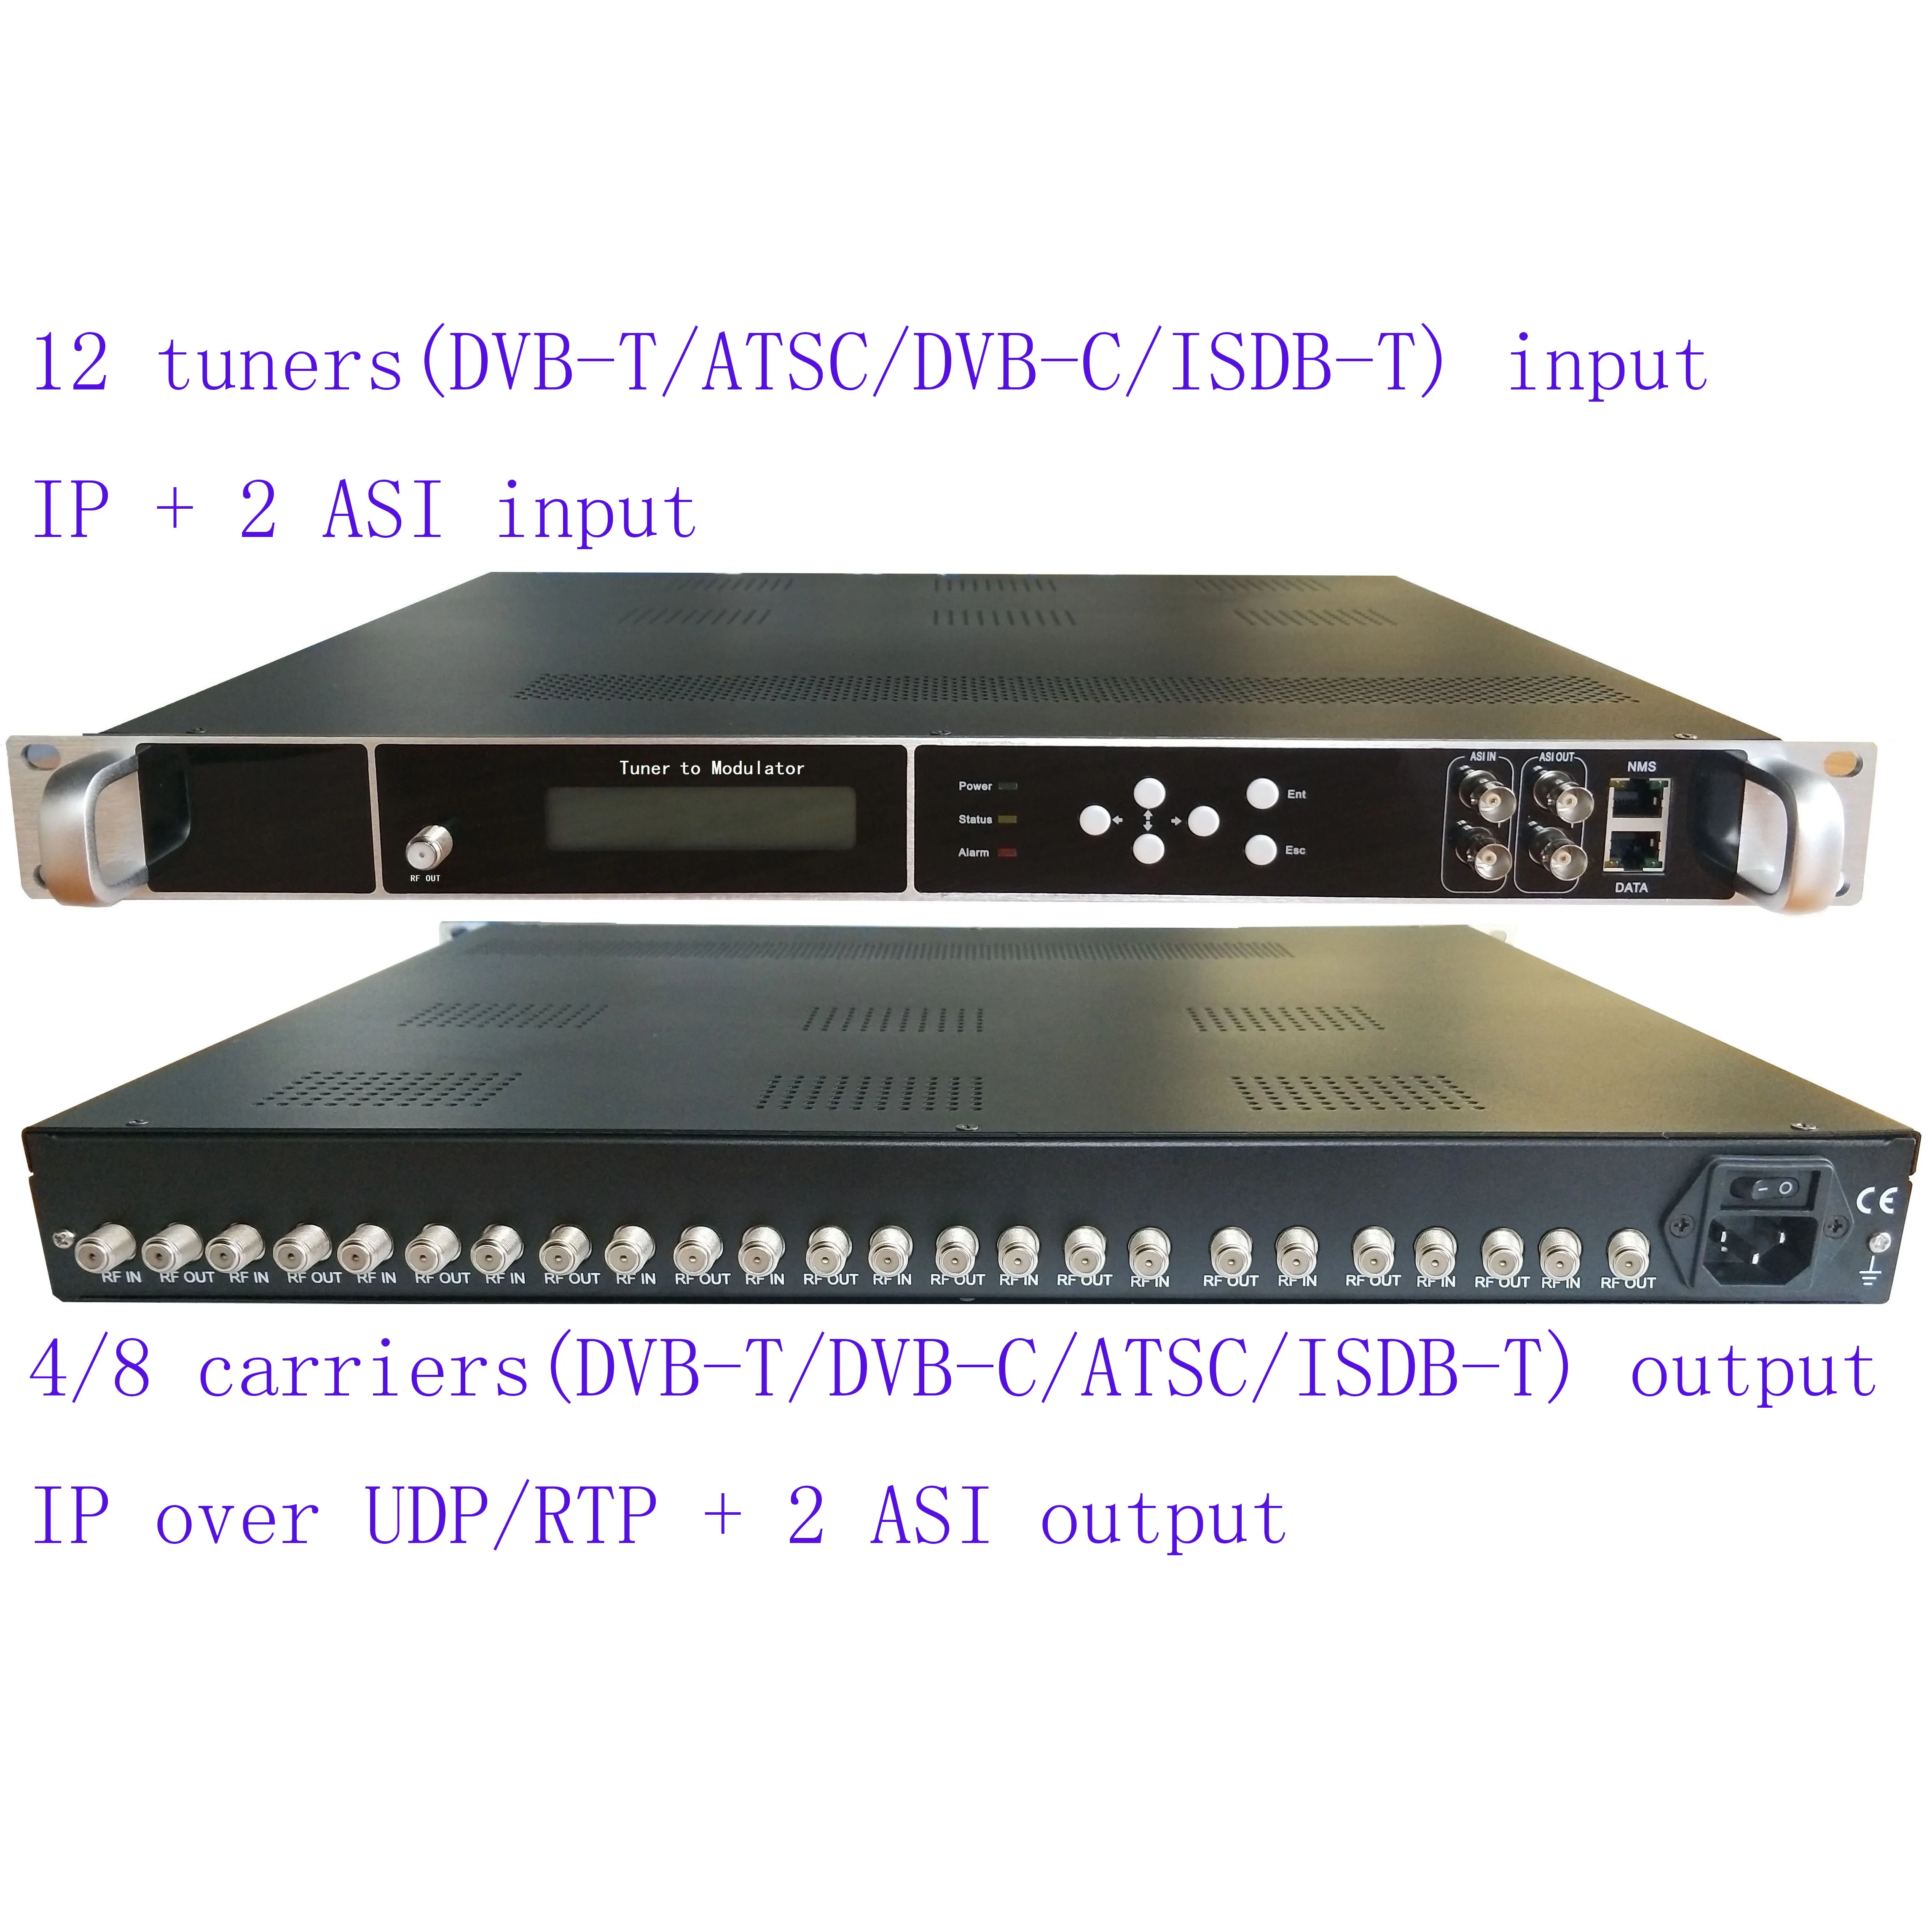 

12 way dvb-s2/S to dvb-C catv modulator, 12 way DVB-C/T tuner to DVB-C RF modulator